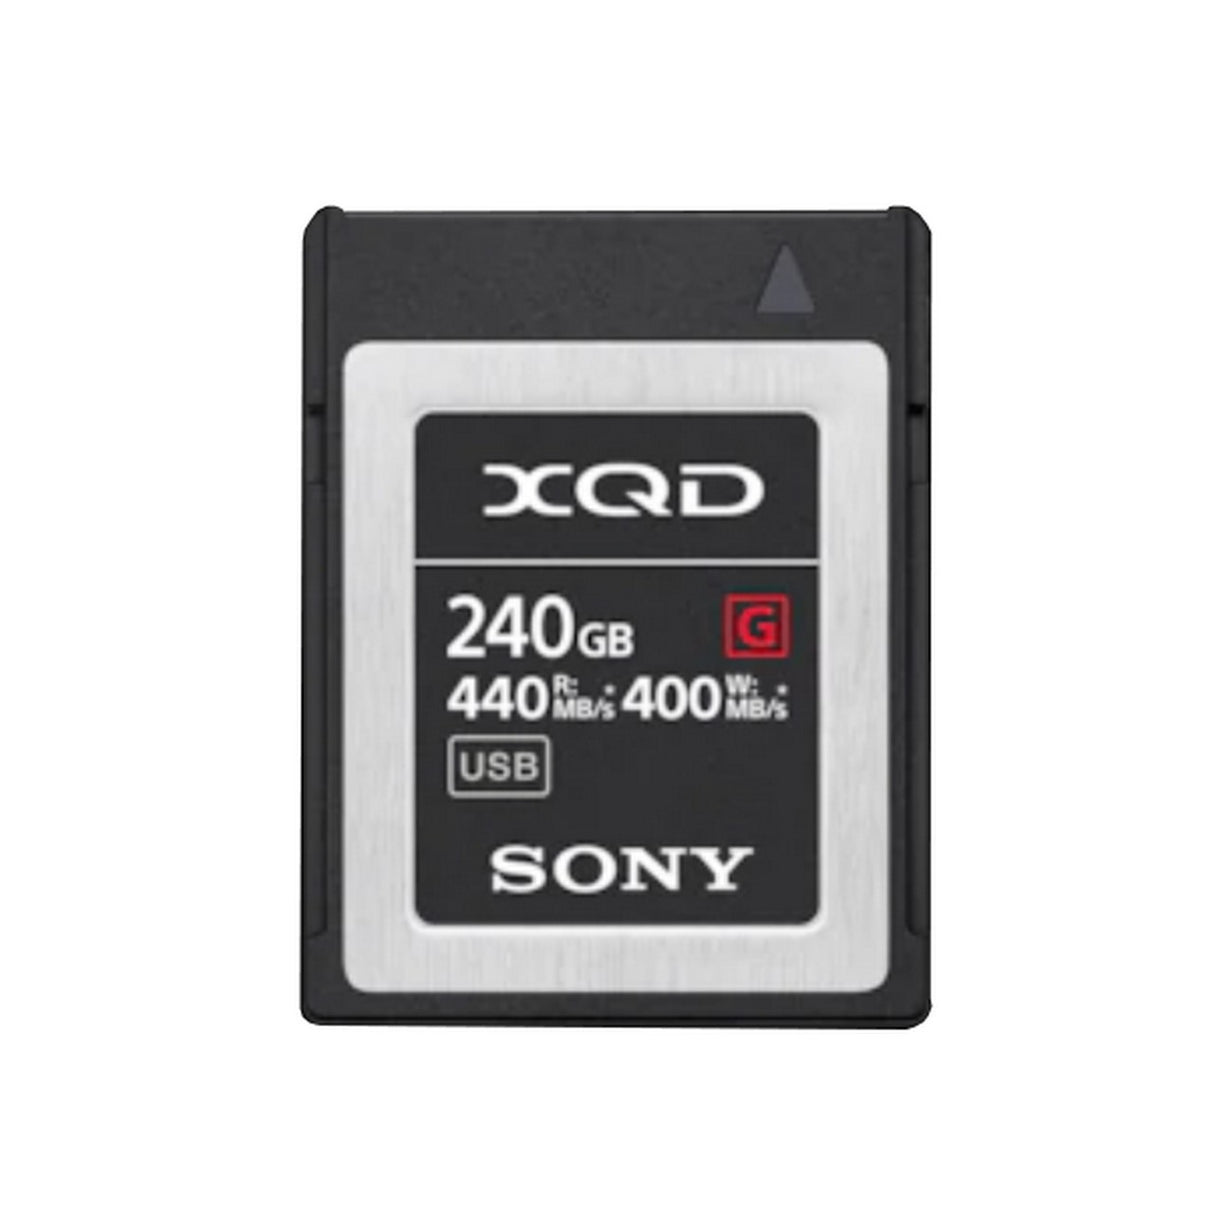 Sony QD-G240F | XQD G Series 240GB Memory Card